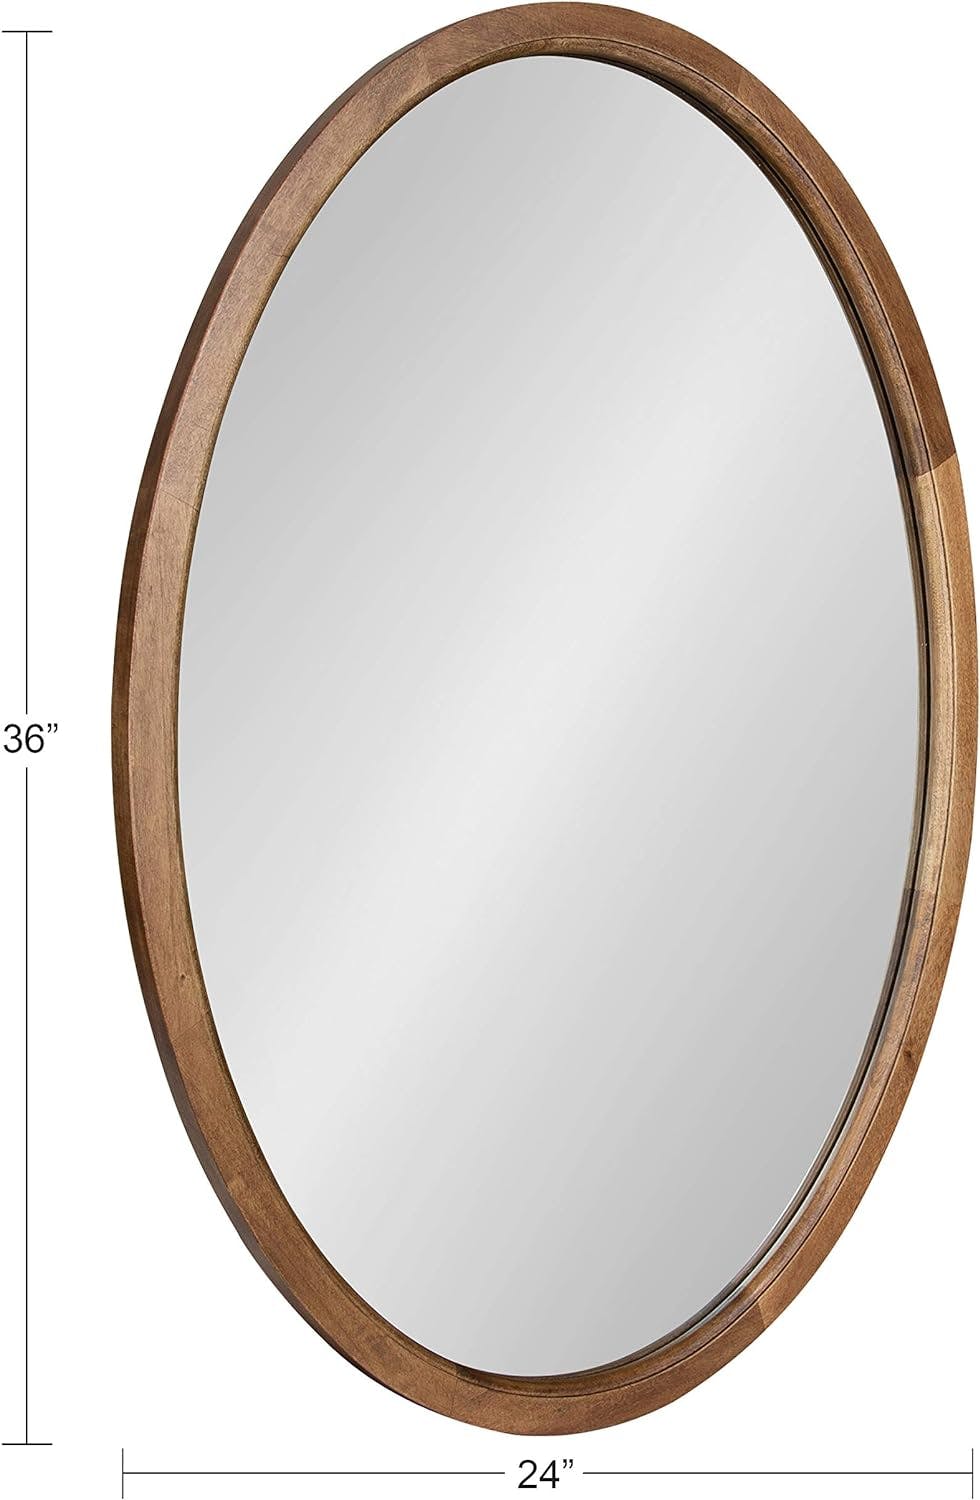 Elegant Farmhouse Oval Wood Bathroom Vanity Mirror, Rustic Brown